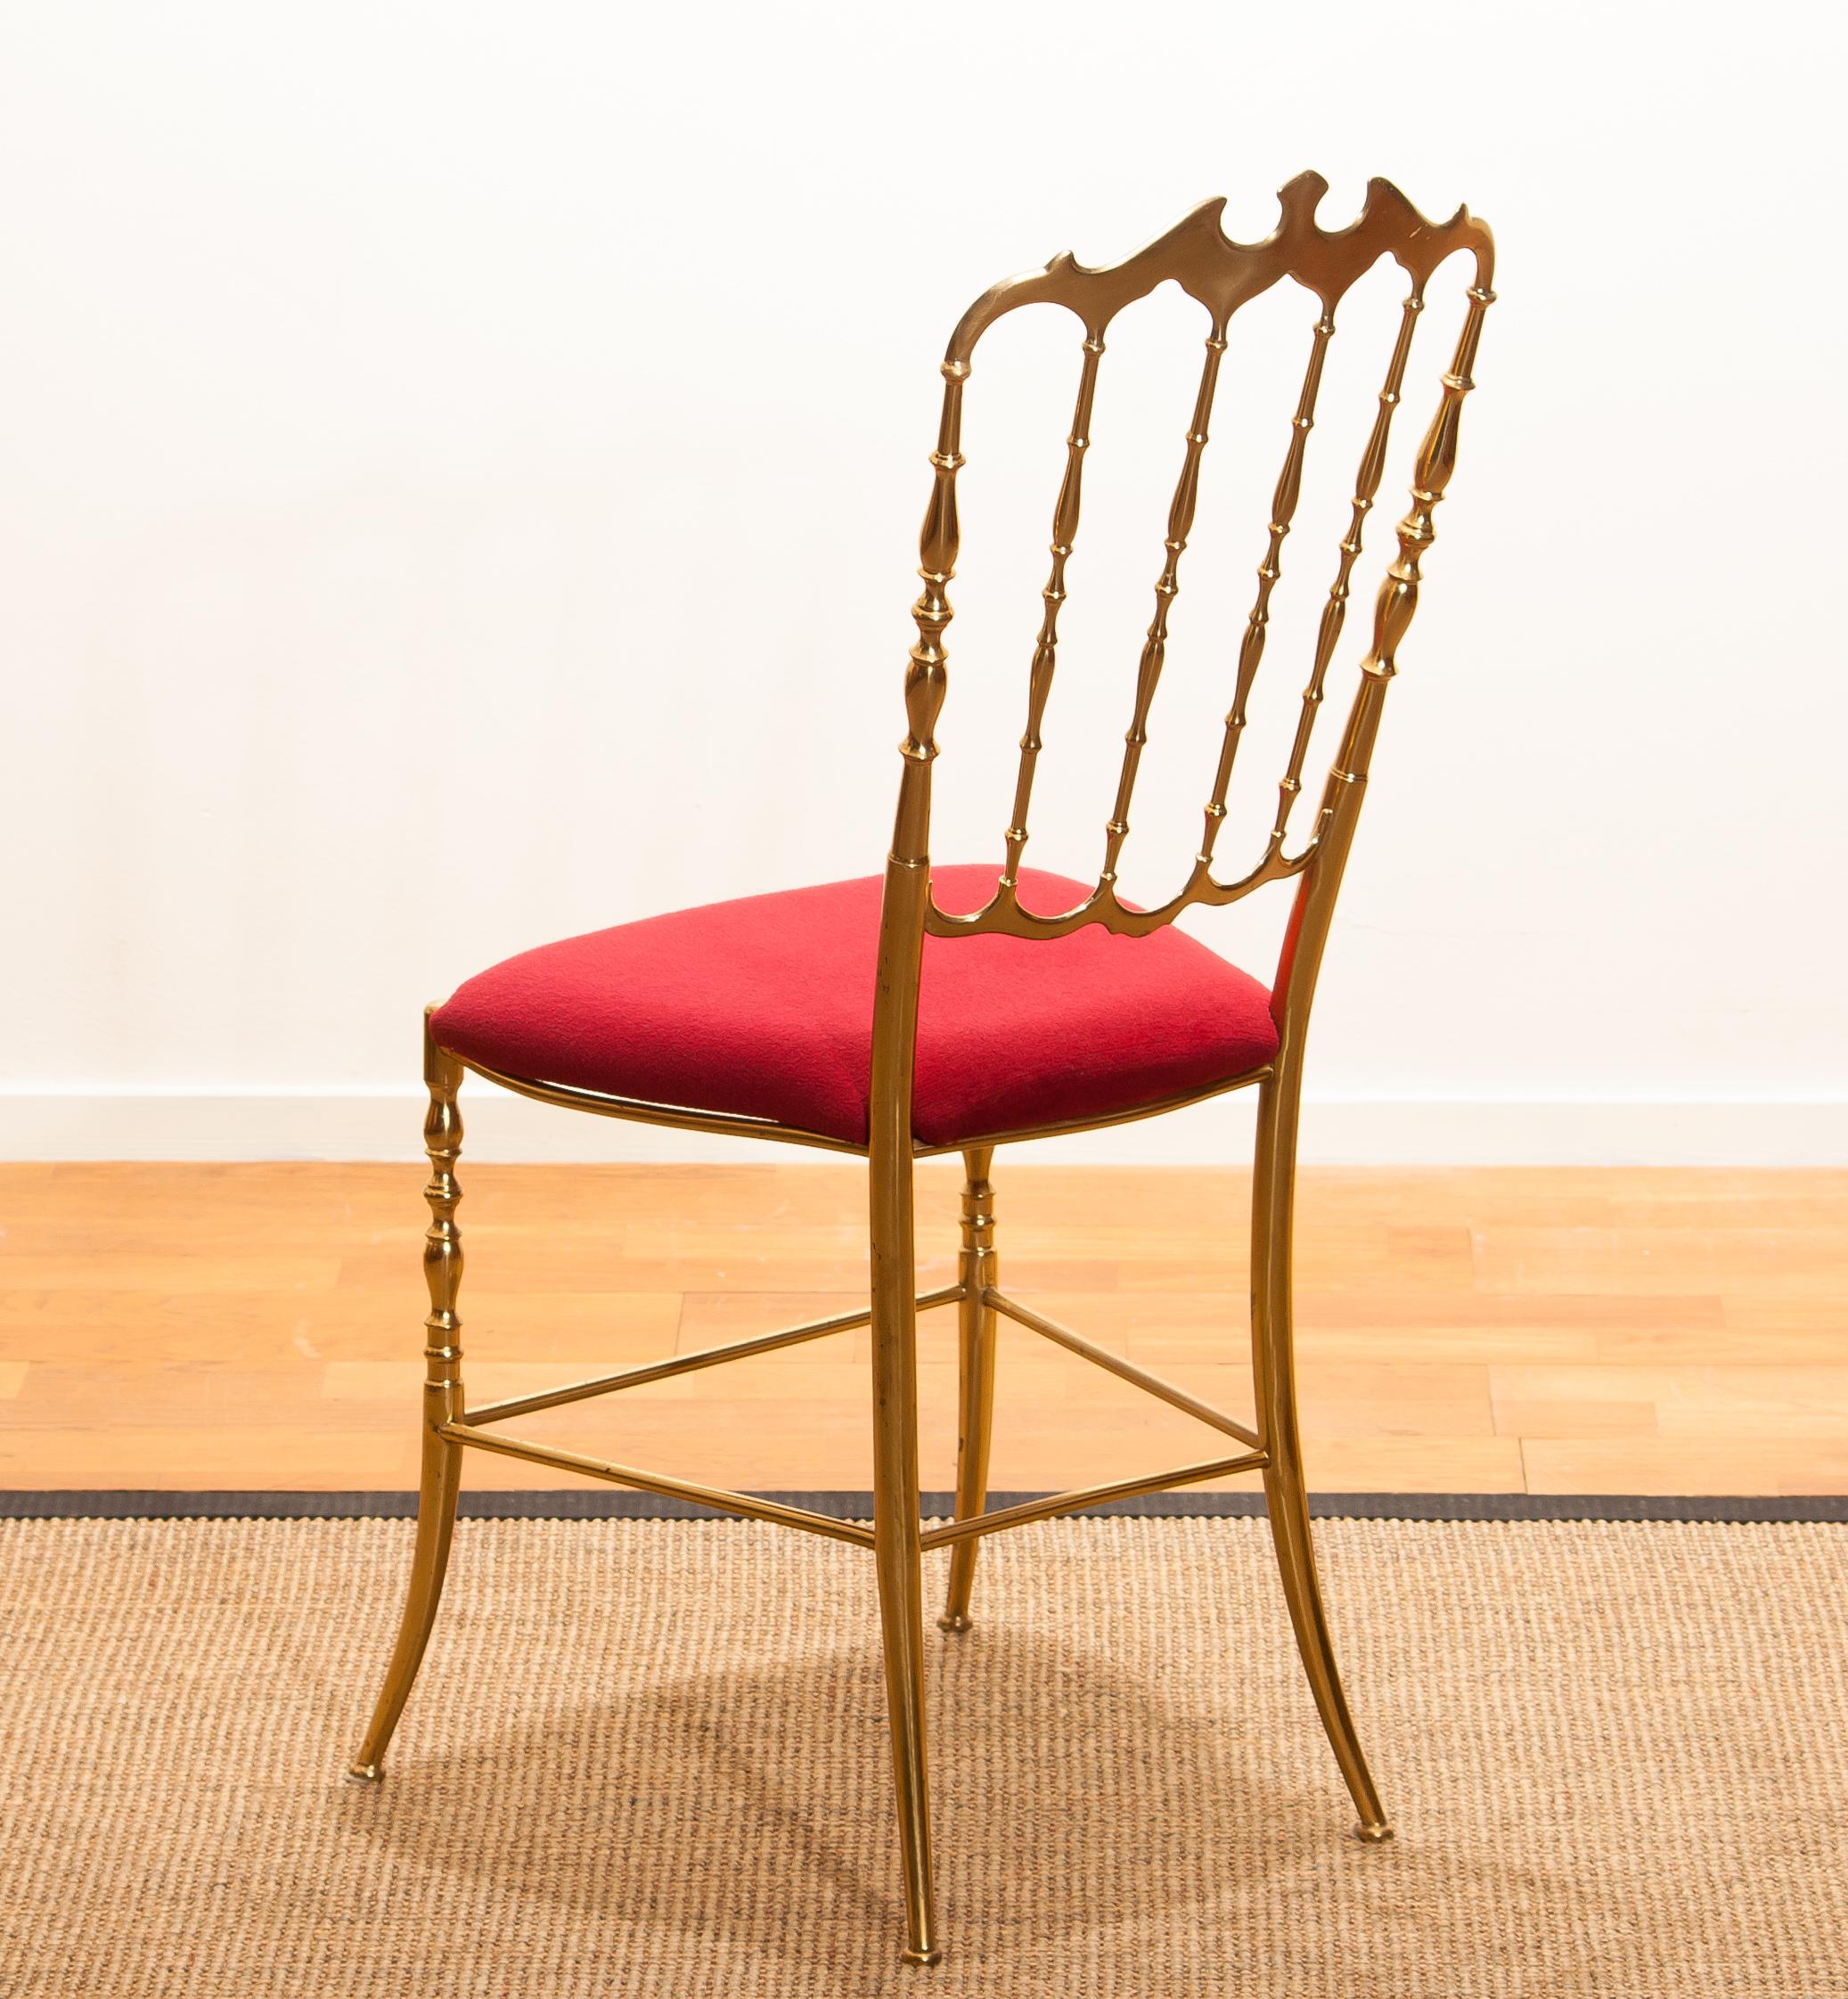 1950s, Brass and Velvet Chair by Chiavari, Italy 1